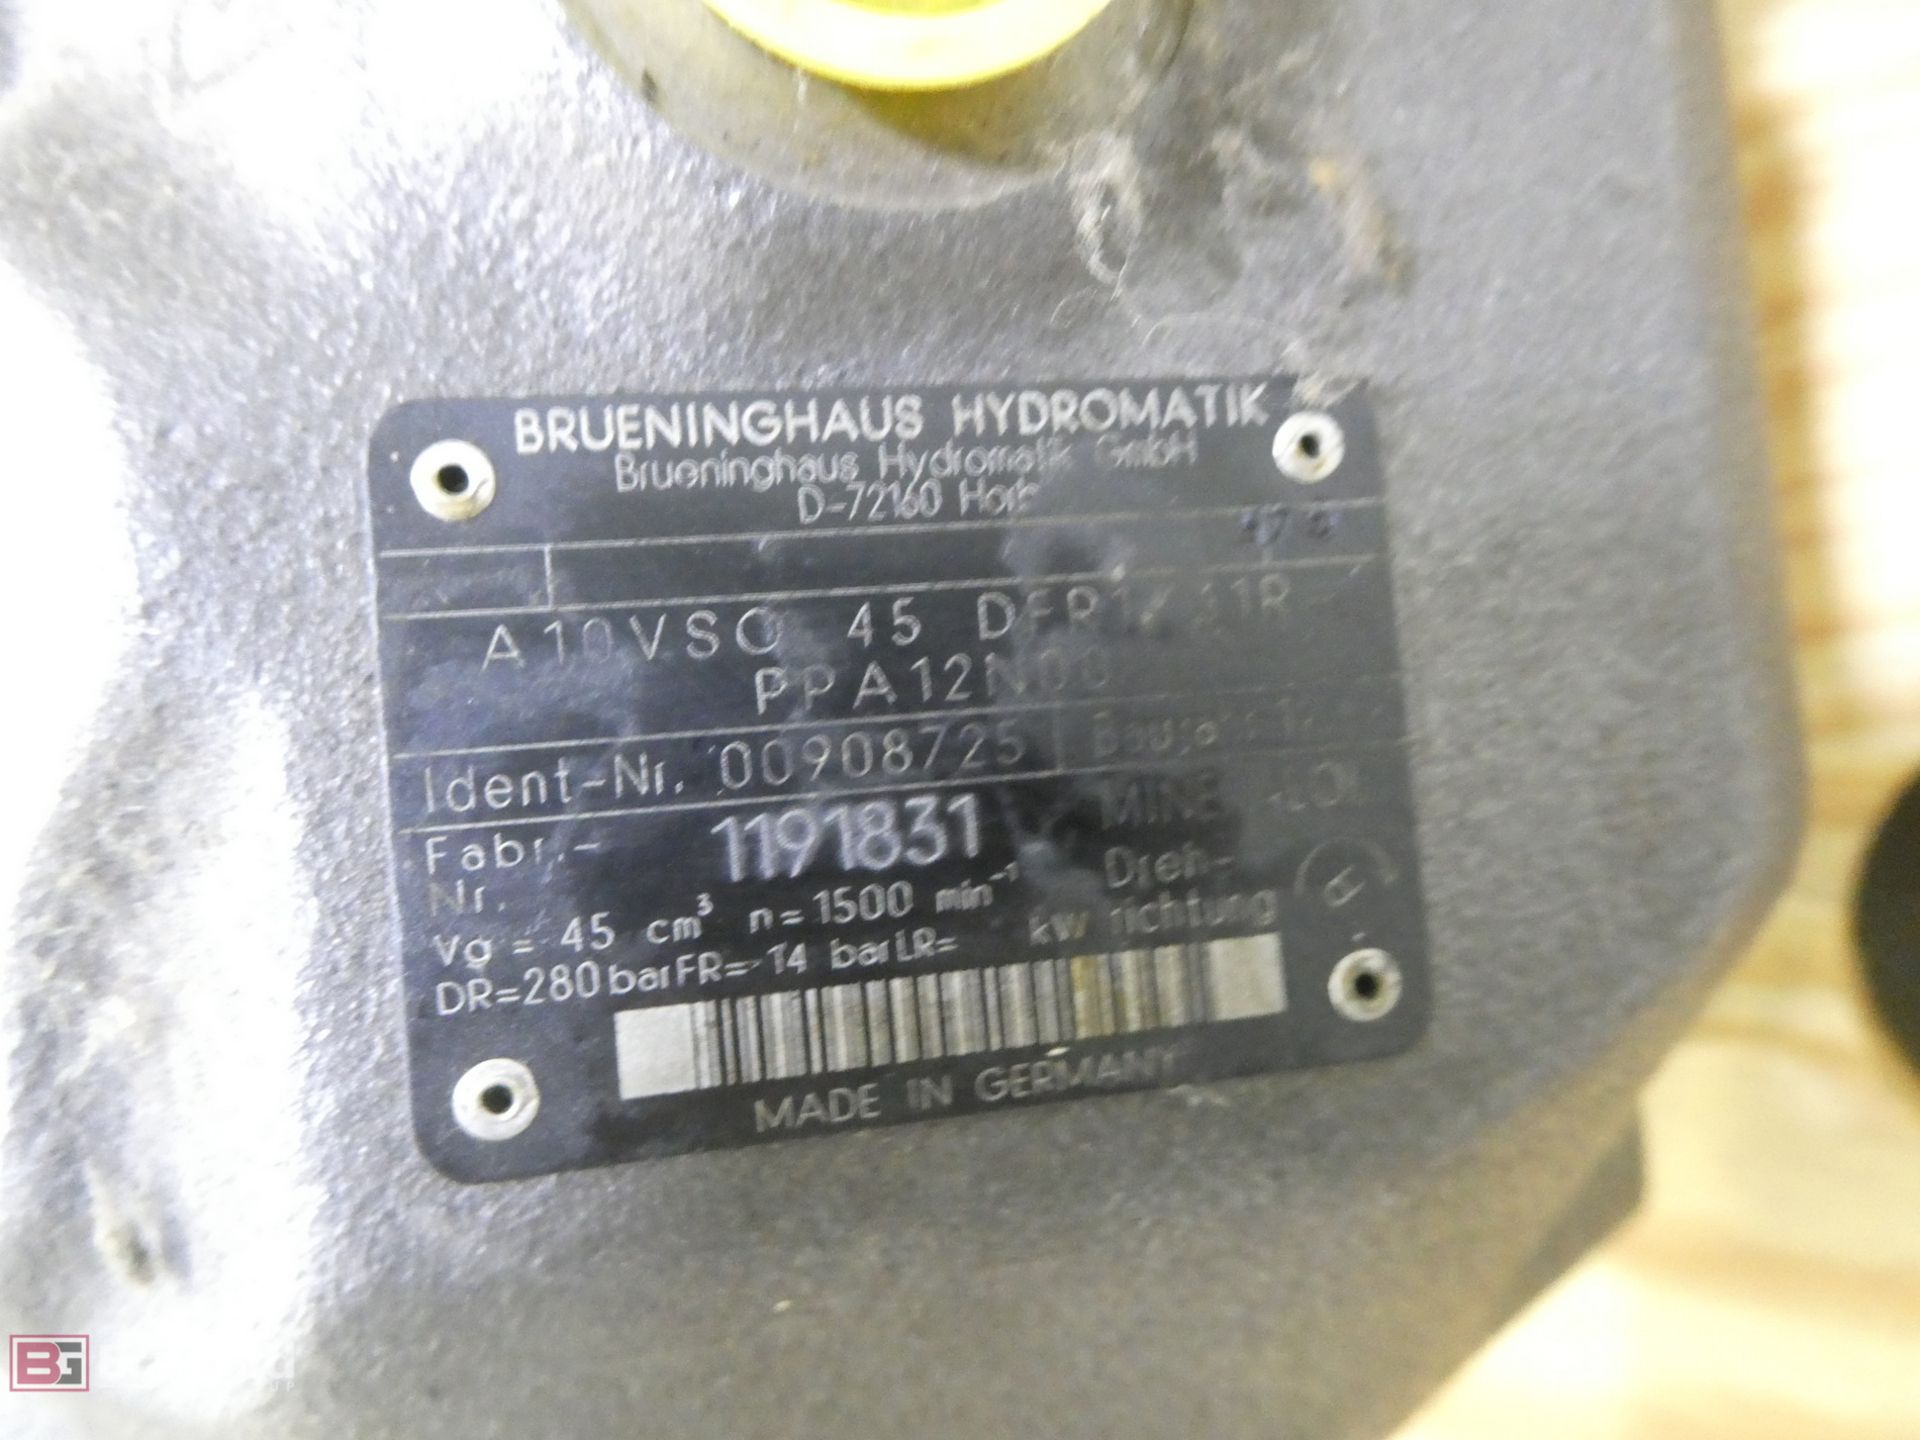 Brueninghaus Hydromatik Model 1191831, Pump & Motor (New) - Image 4 of 4